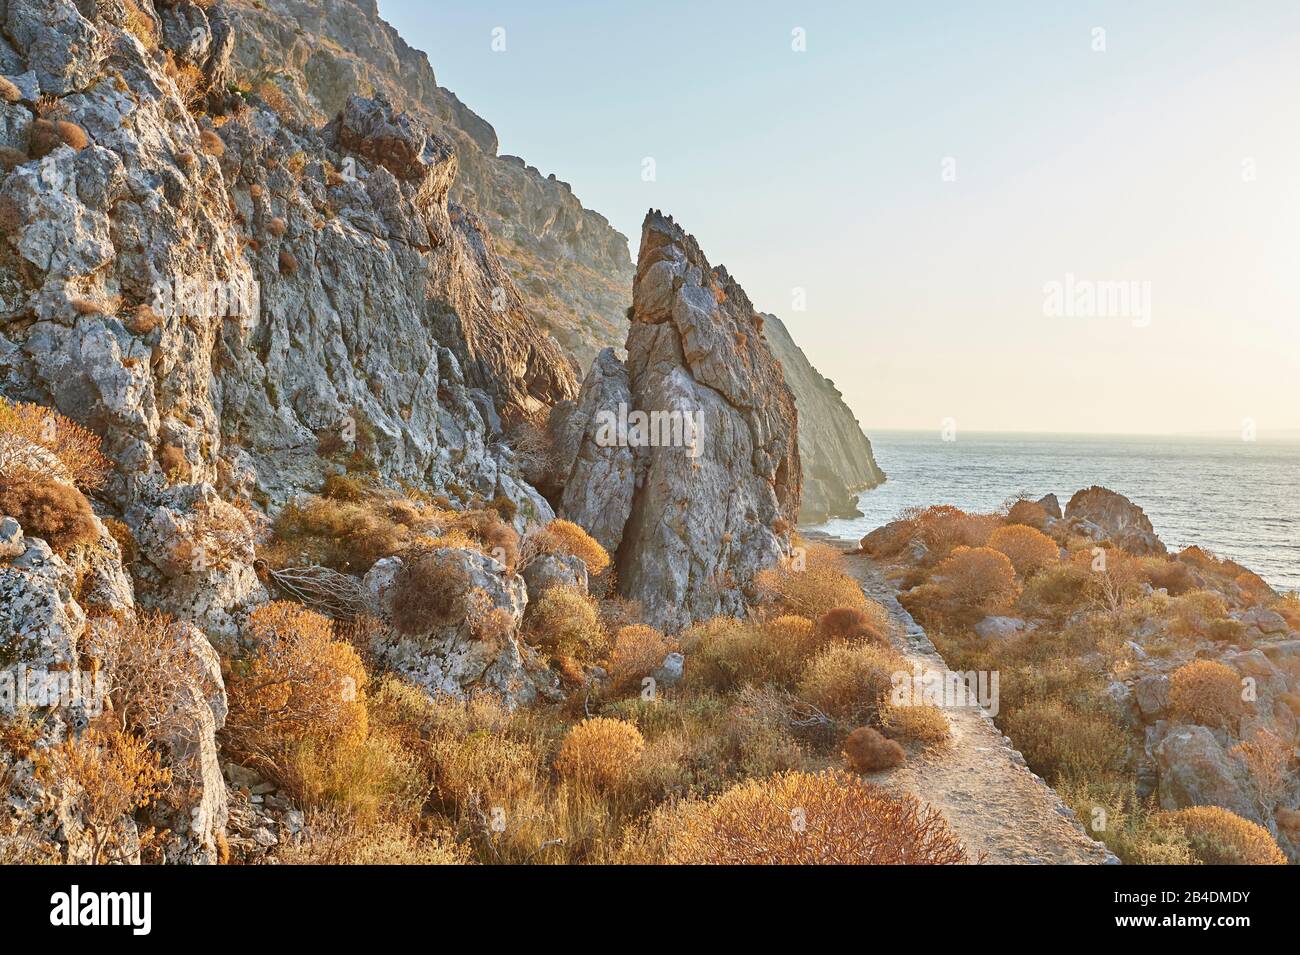 Landscape, Paligremnos beach at the coast, vegetation, Crete, Greece Stock Photo